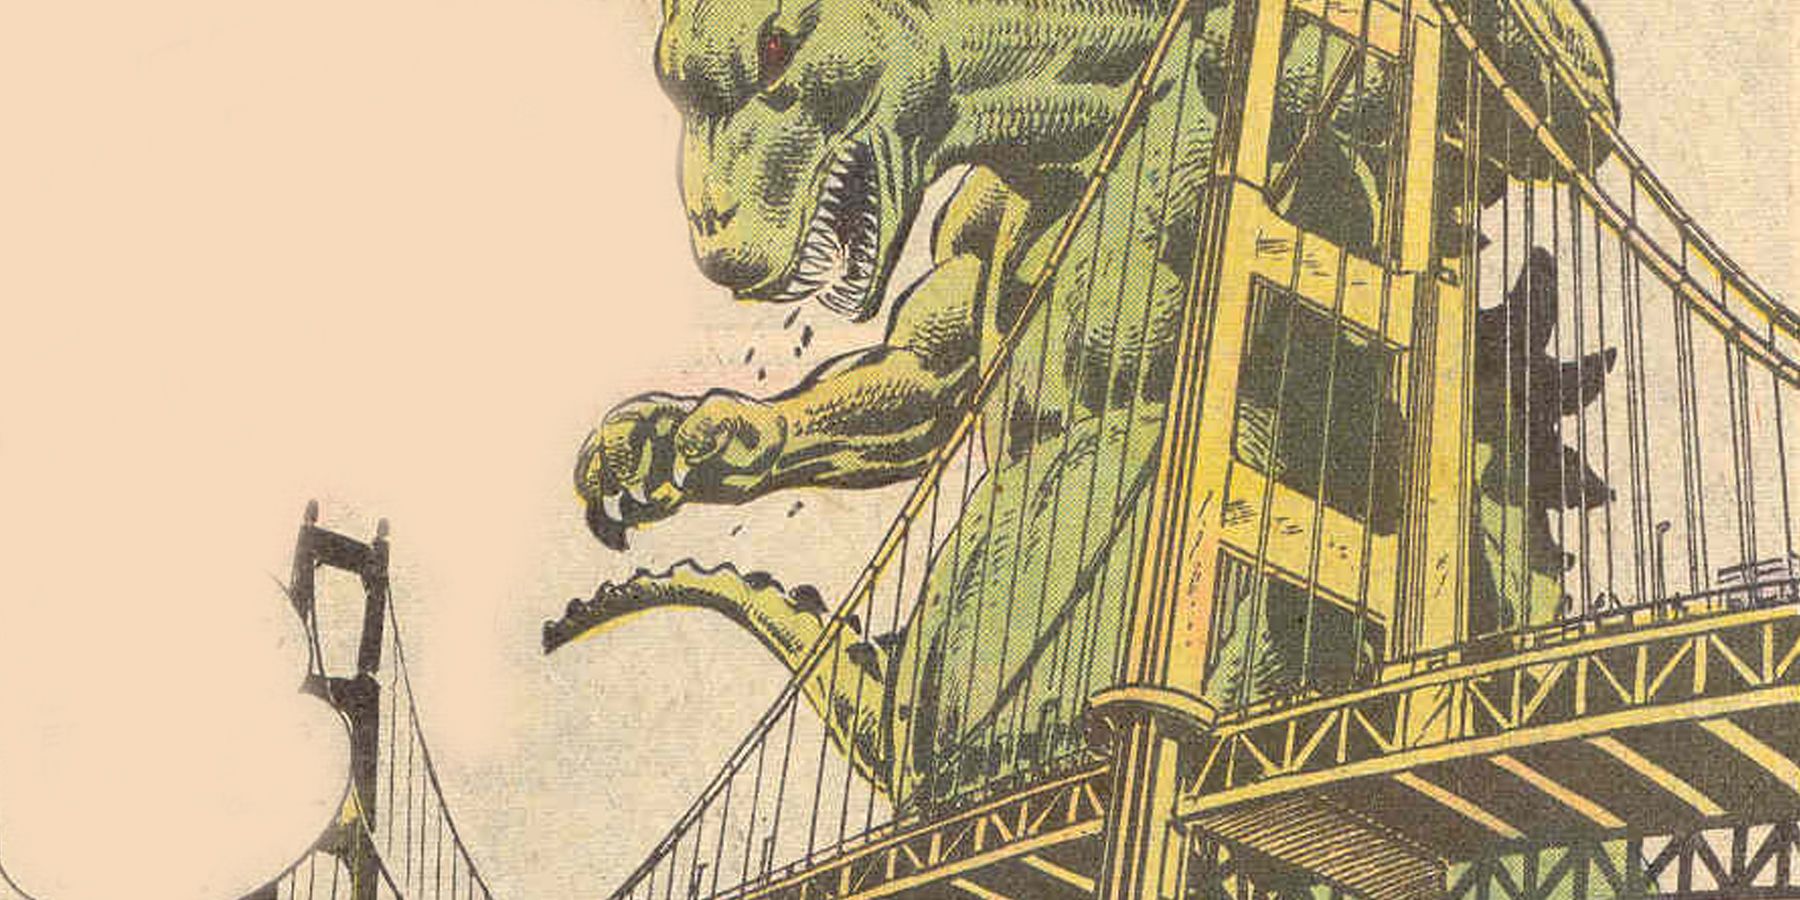 Godzilla attacking the GOlden Gate Bridge